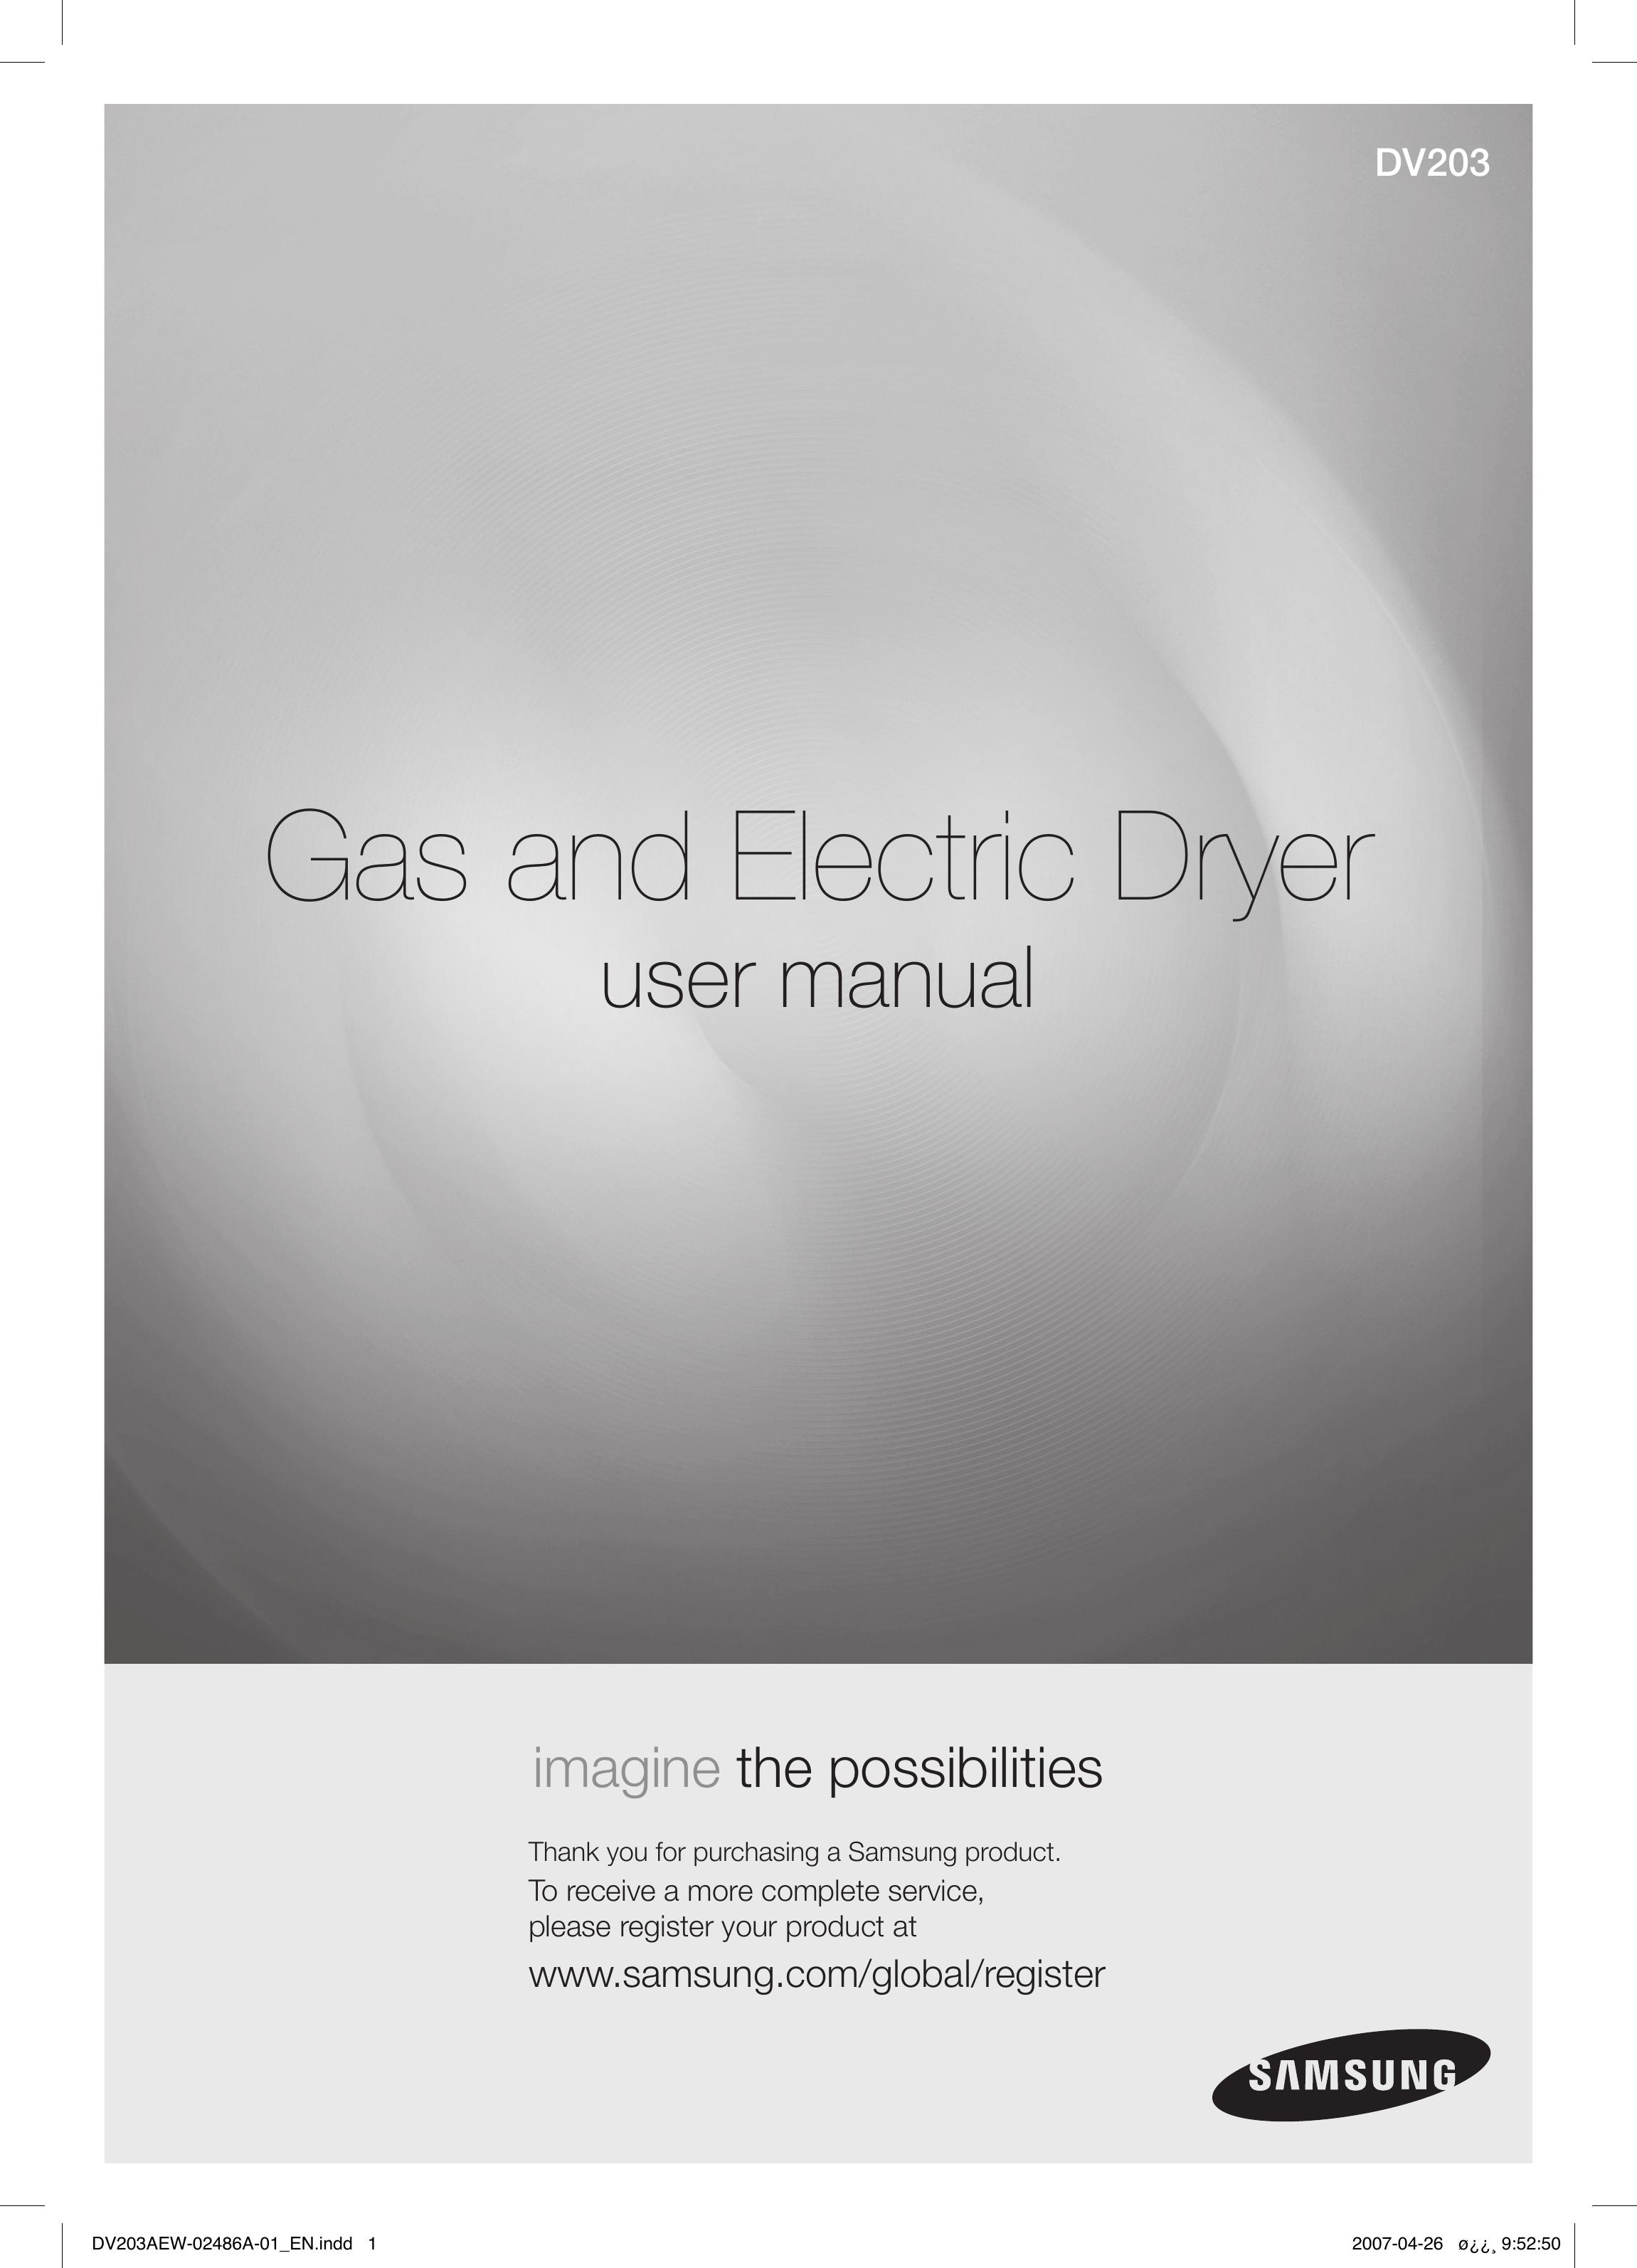 Samsung DV203 Clothes Dryer User Manual